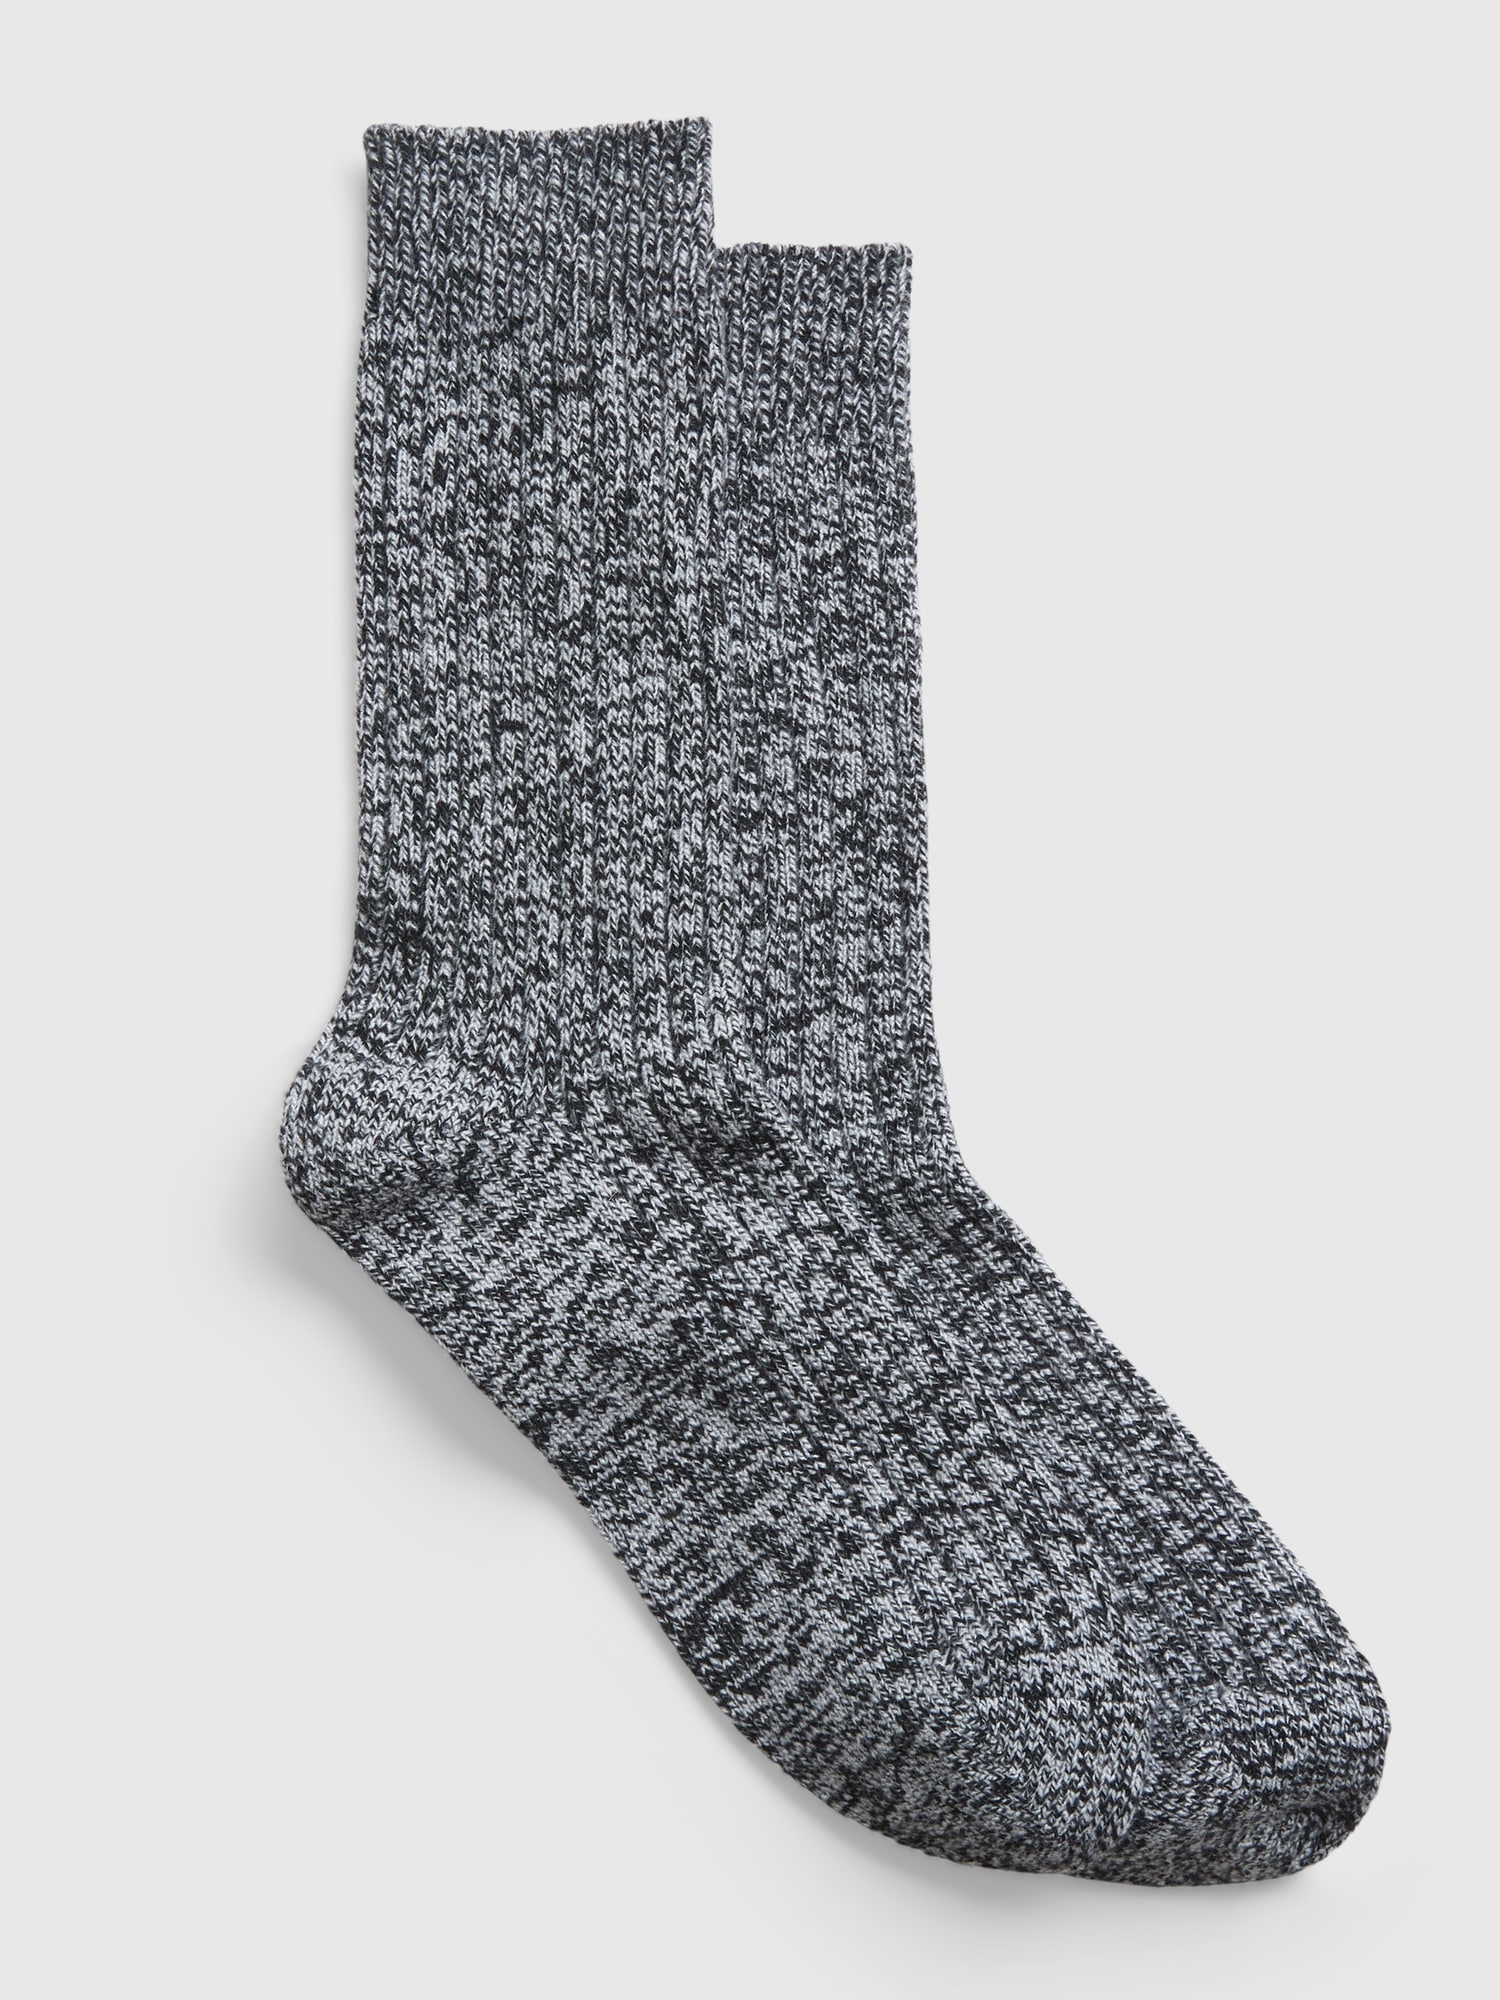 Marled Boot Socks | Gap